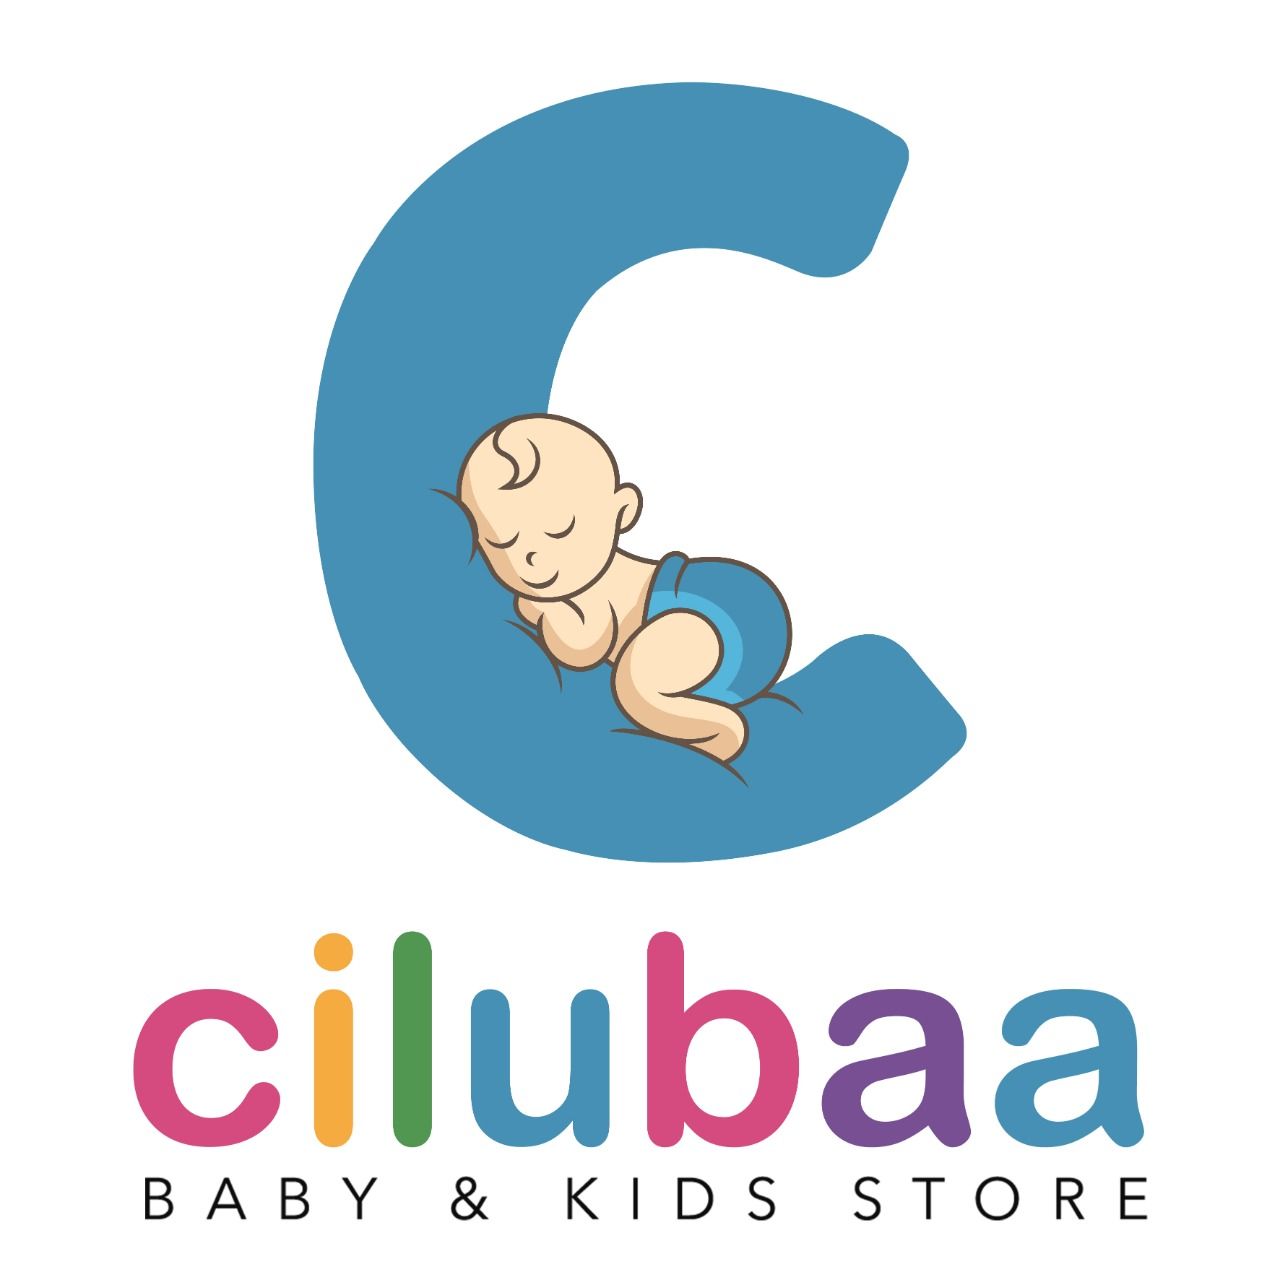 Cilubaa Baby & Kids